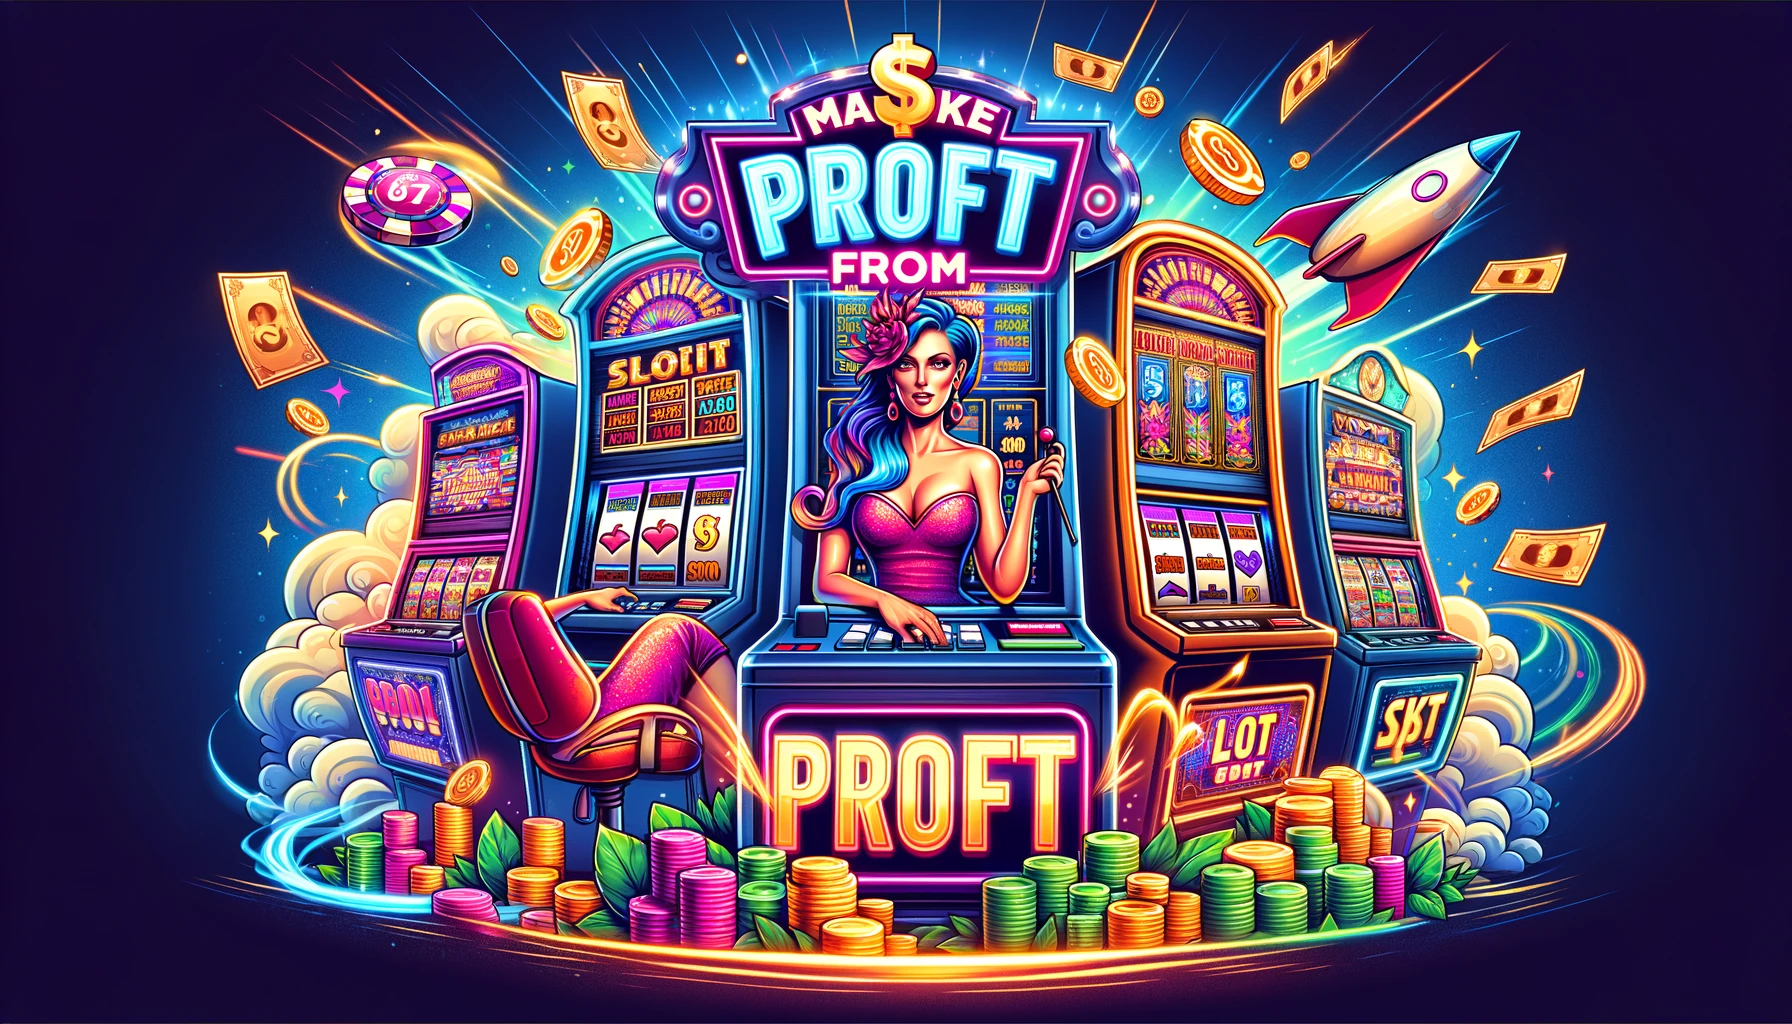 Make profit from Slots888